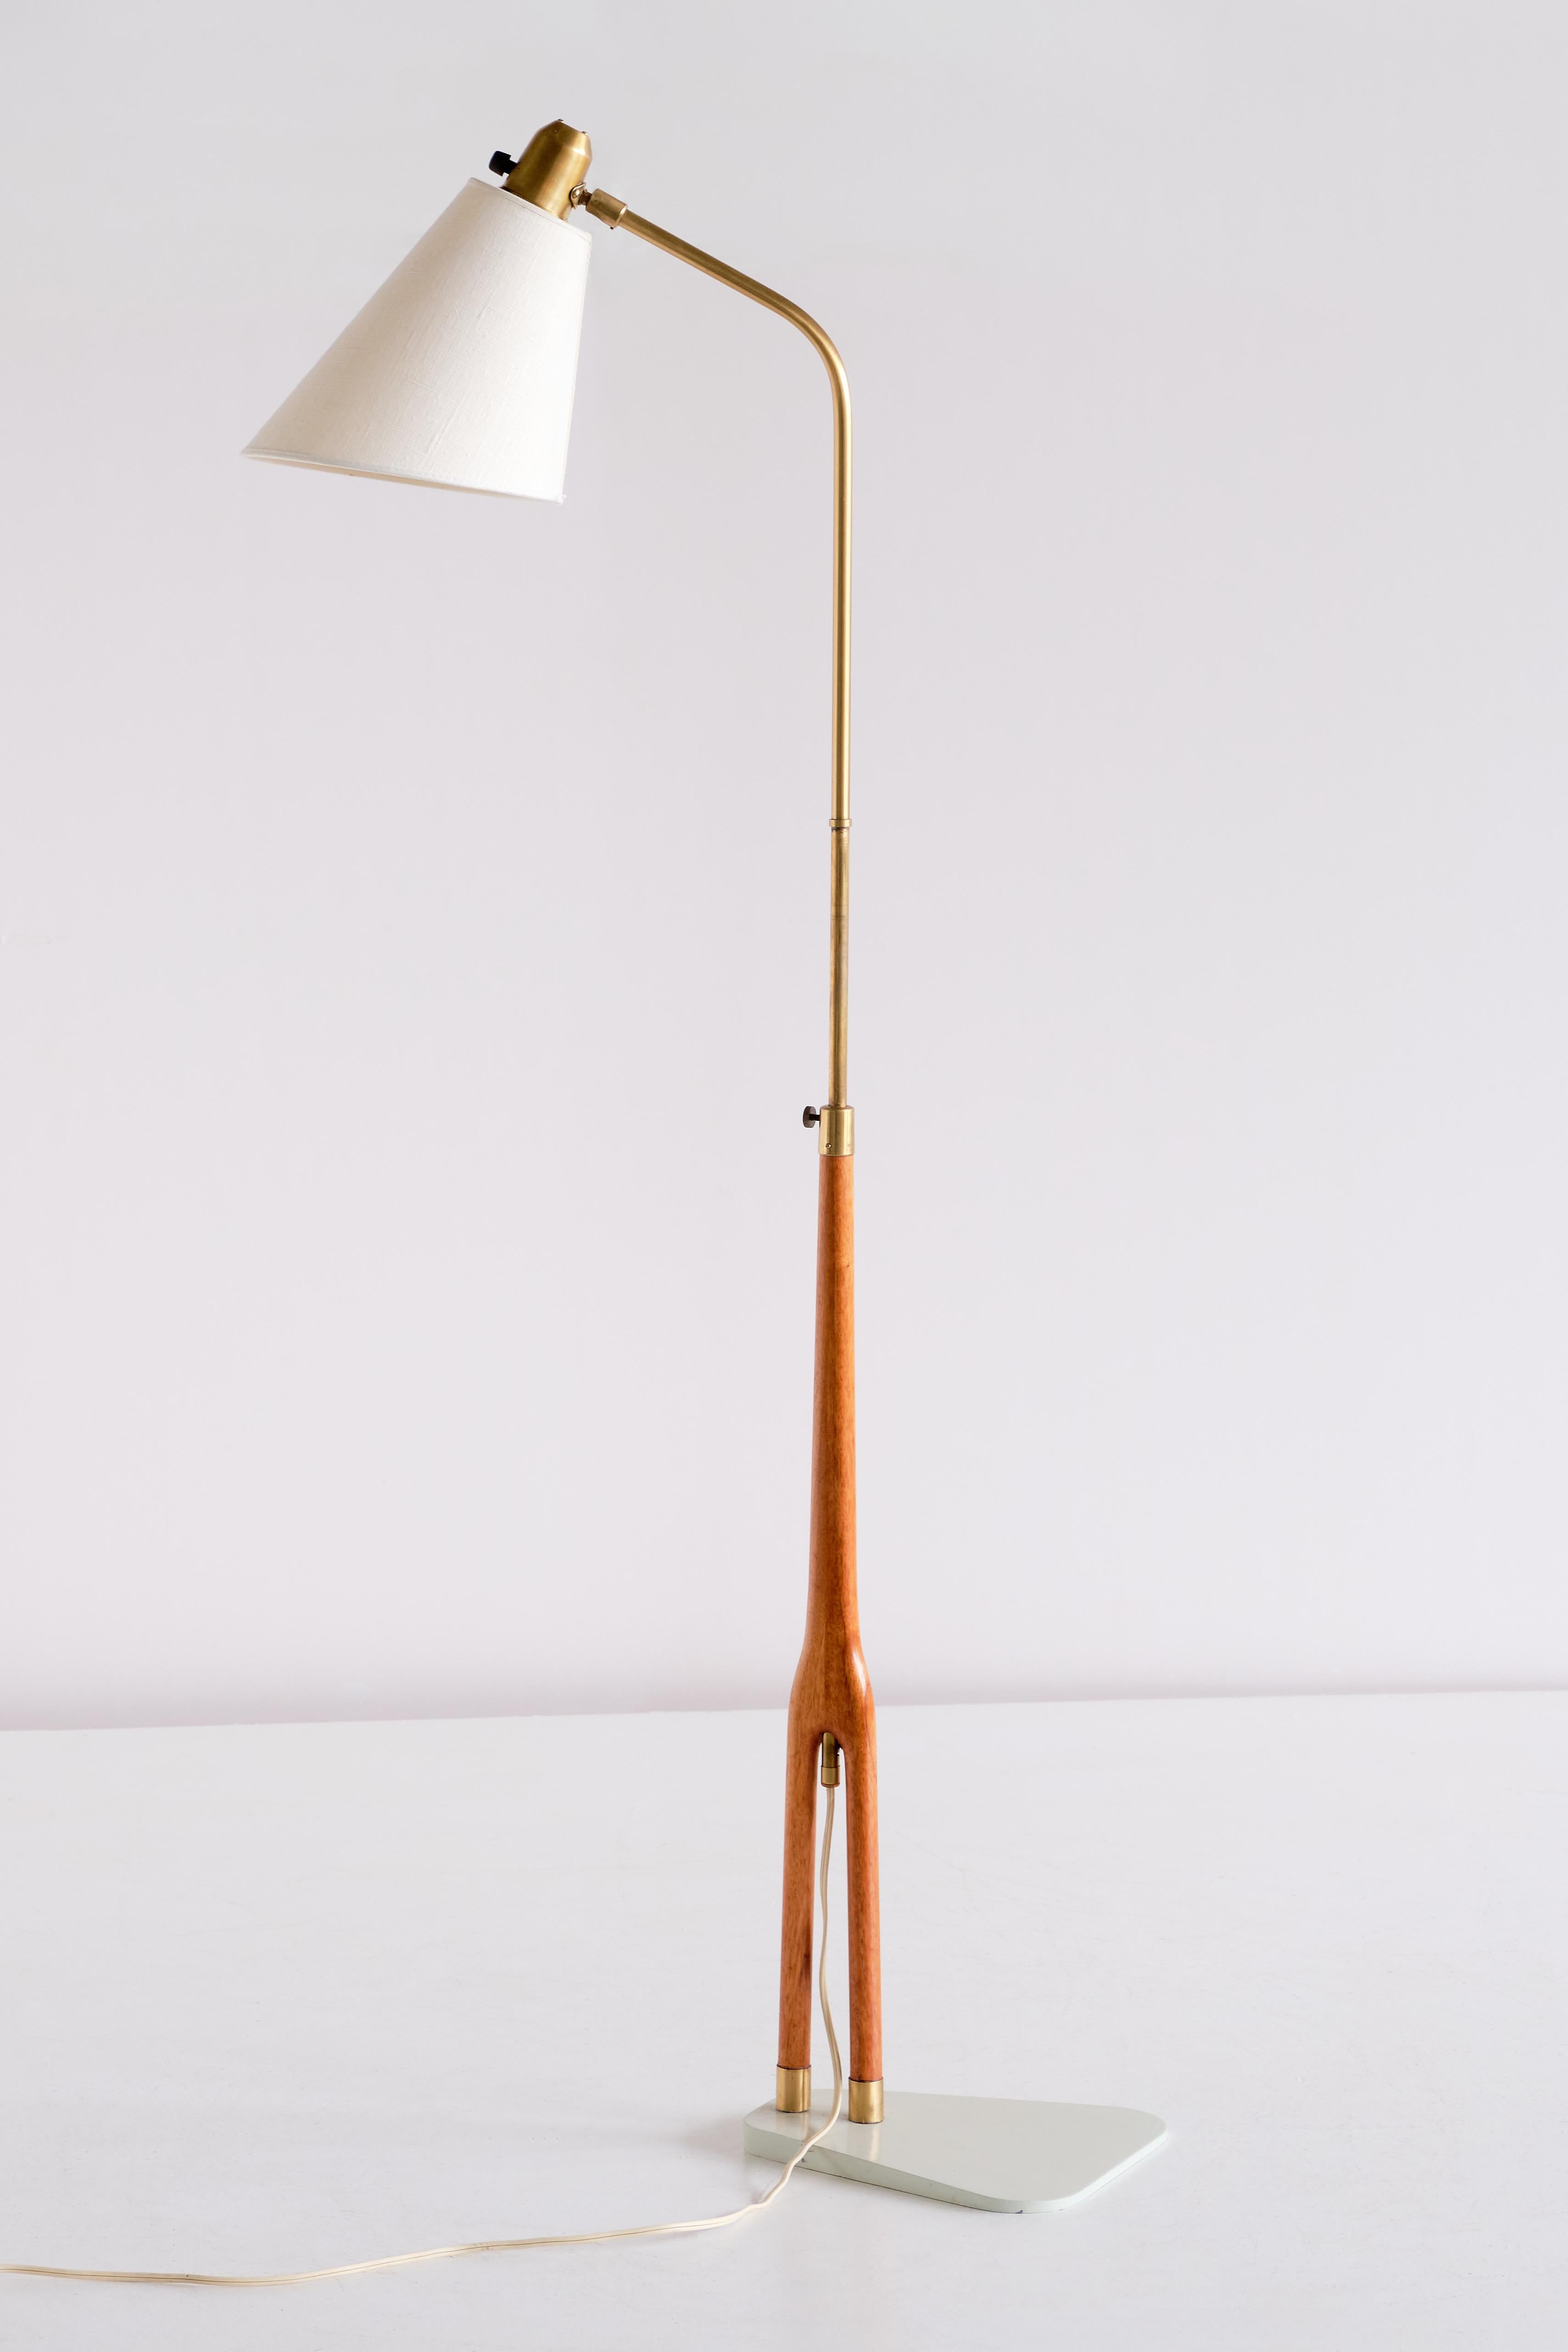 Swedish Hans Bergström Floor Lamp in Teak and Brass, ASEA, Sweden, 1950s For Sale